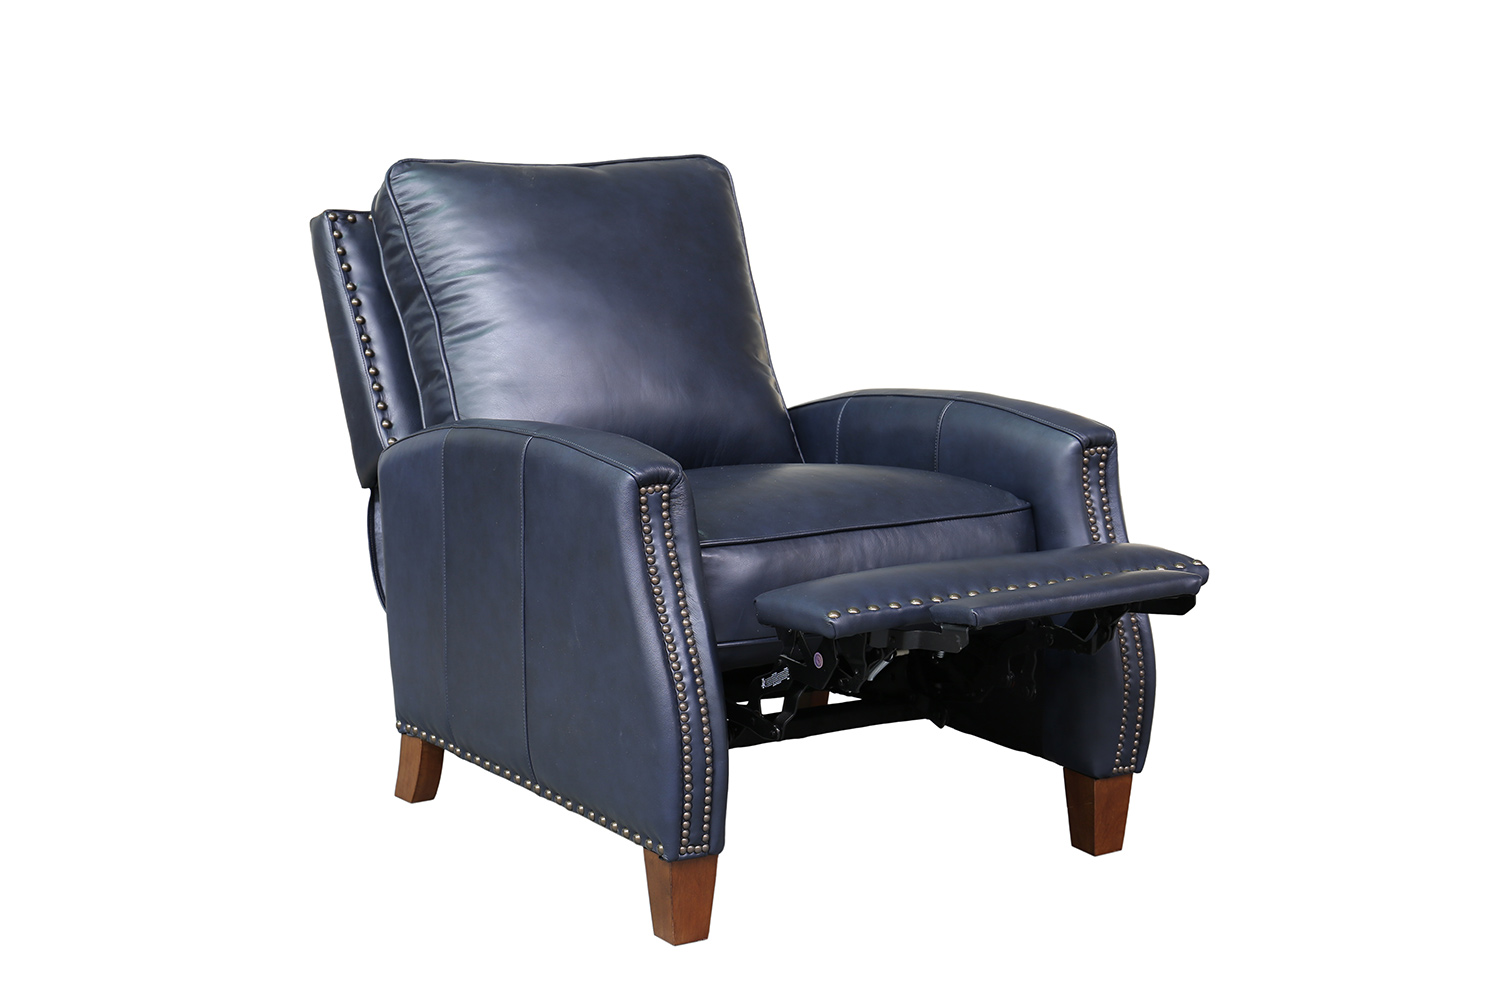 Barcalounger Melrose Recliner Chair - Shoreham Blue/All Leather